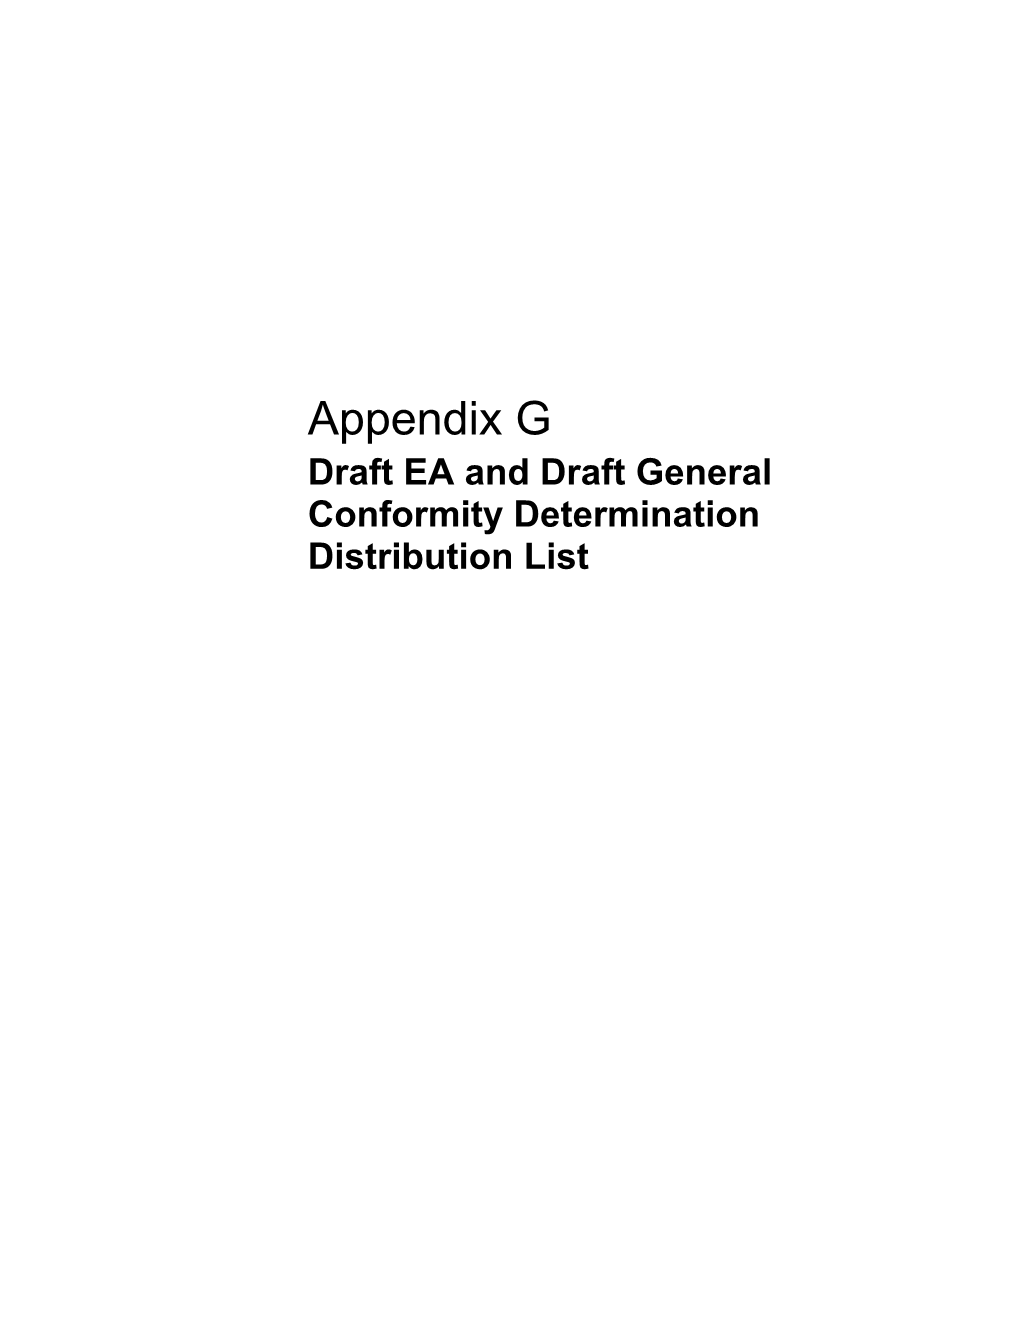 Appendix G Draft EA and Draft General Conformity Determination Distribution List